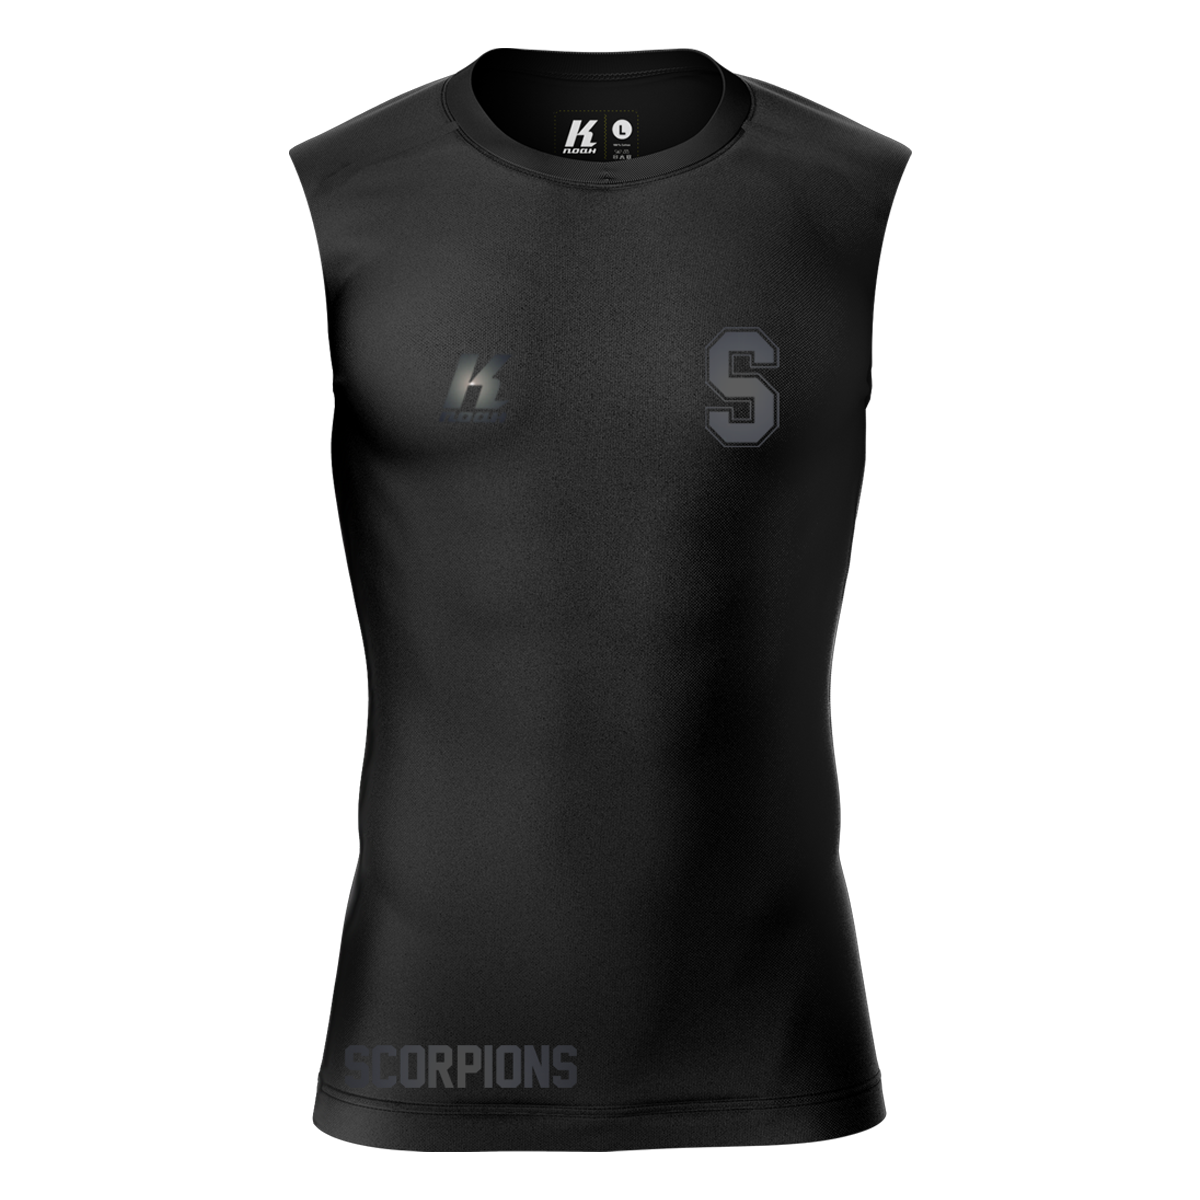 Scorpions "Blackline" K.Tech Compression Sleeveless Shirt